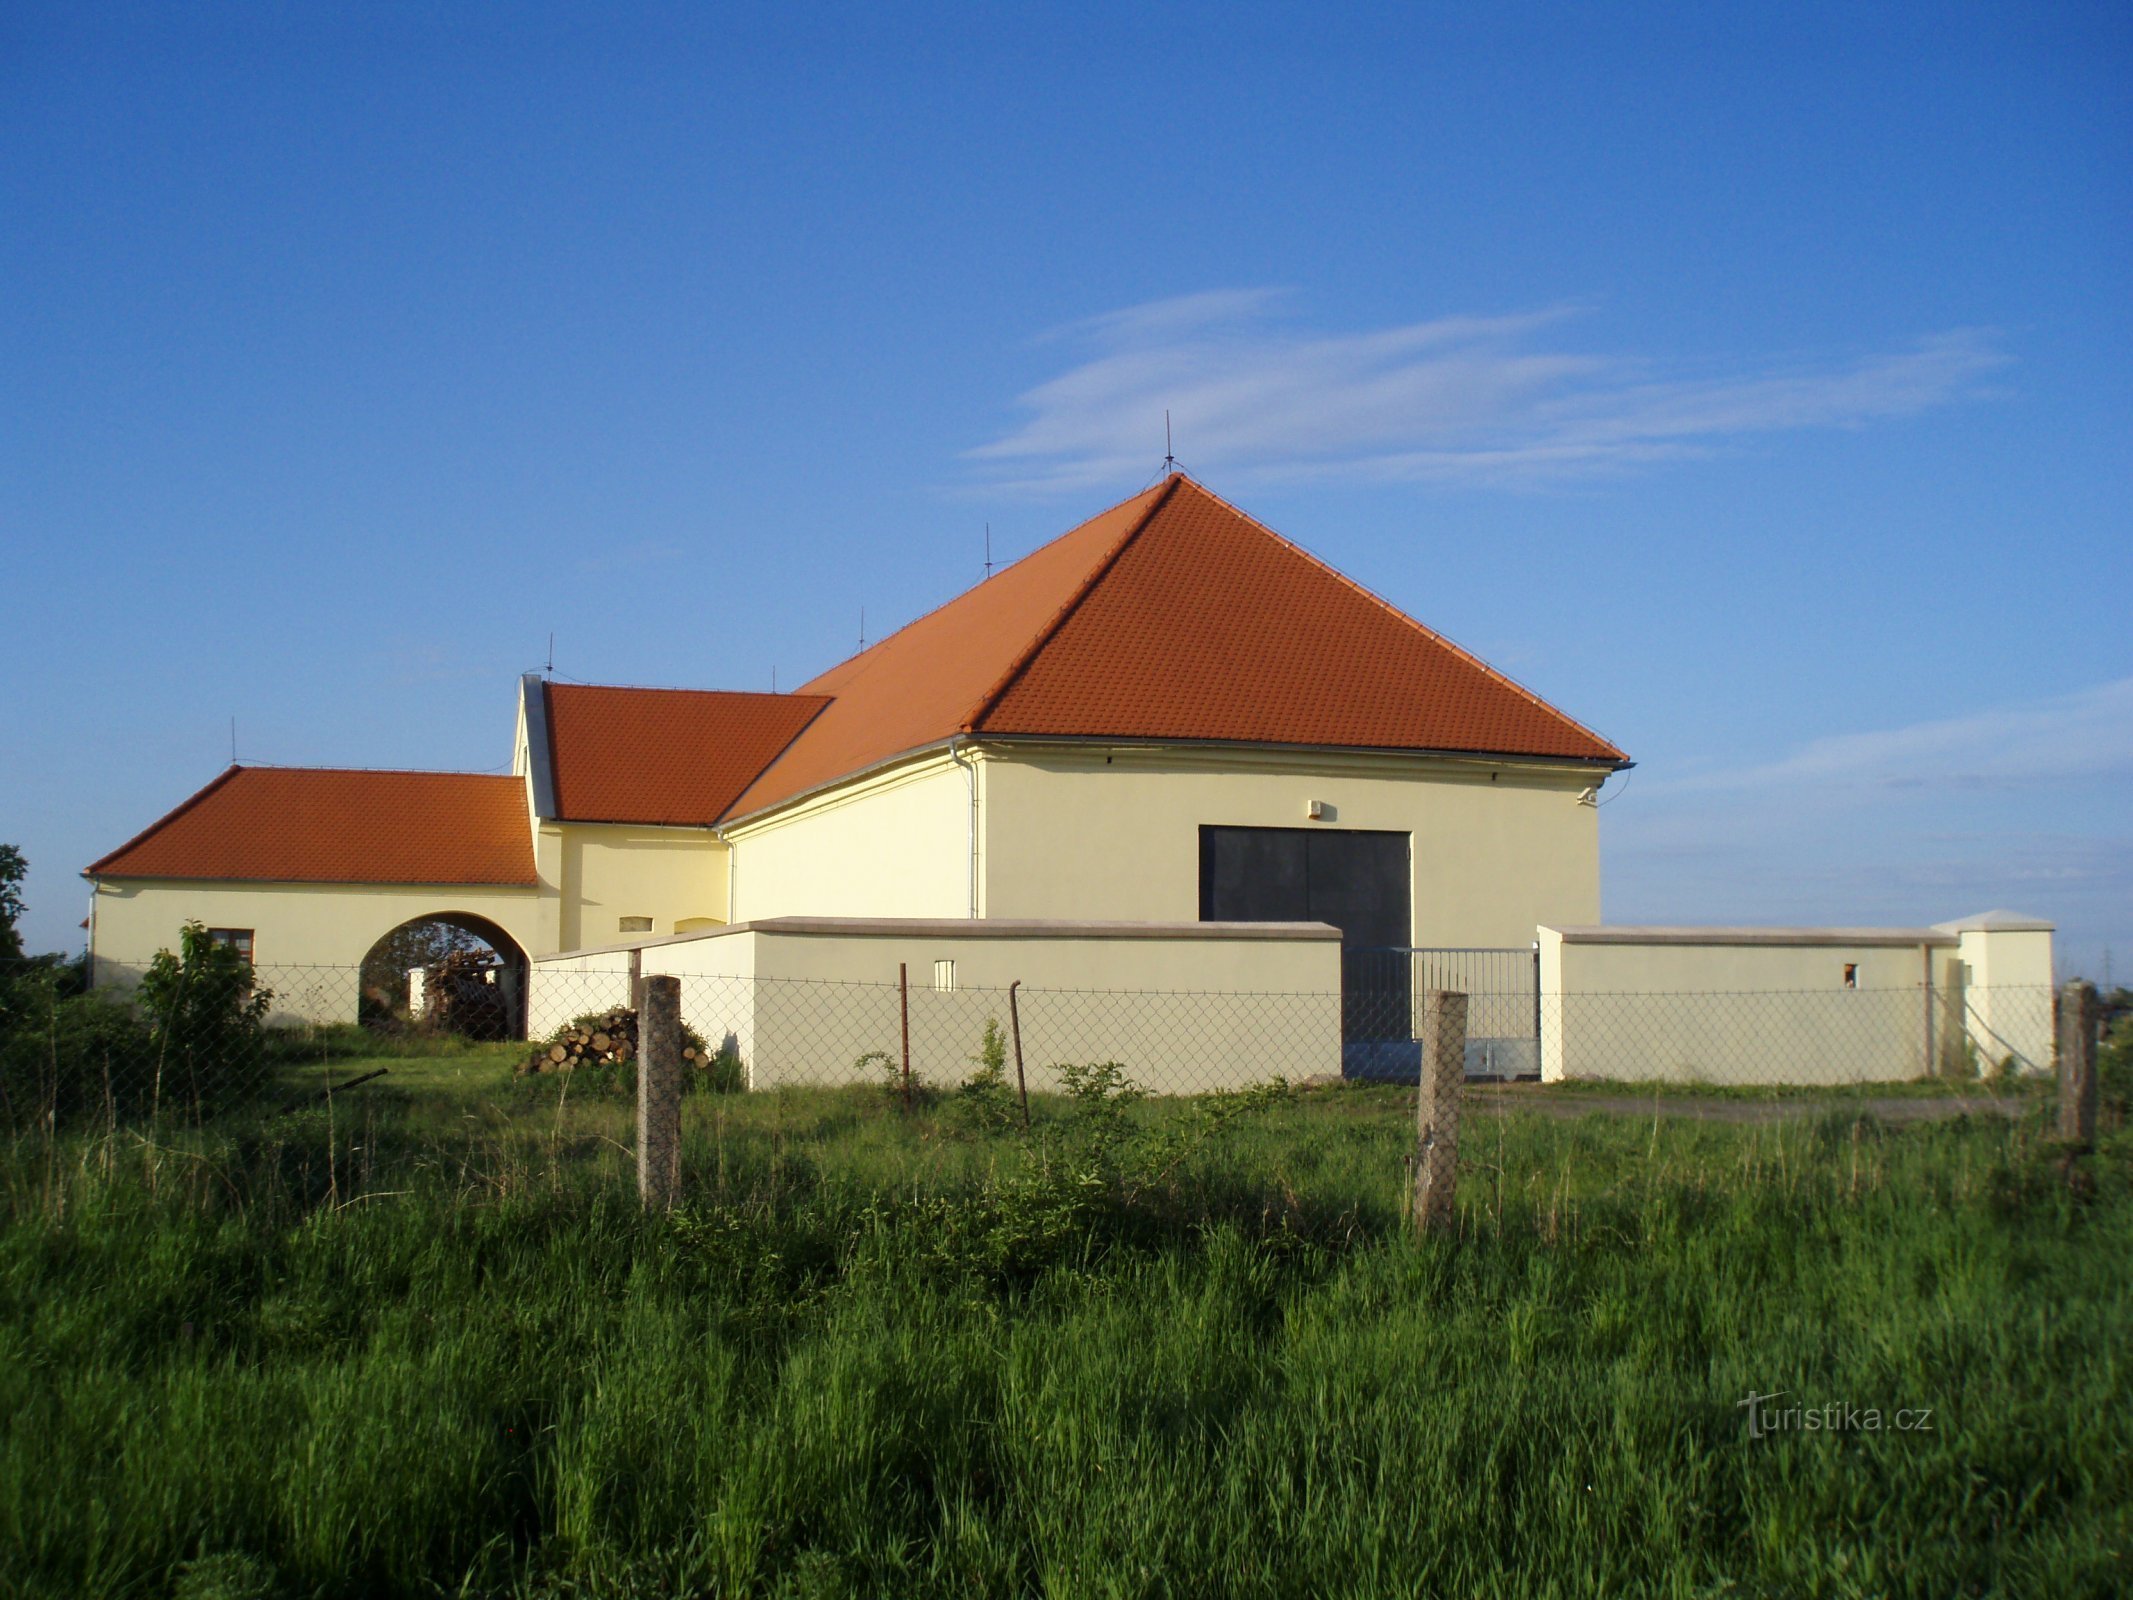 Jauhetehdas lähellä Kuklenia (Hradec Králové, 8.5.2011. toukokuuta XNUMX)